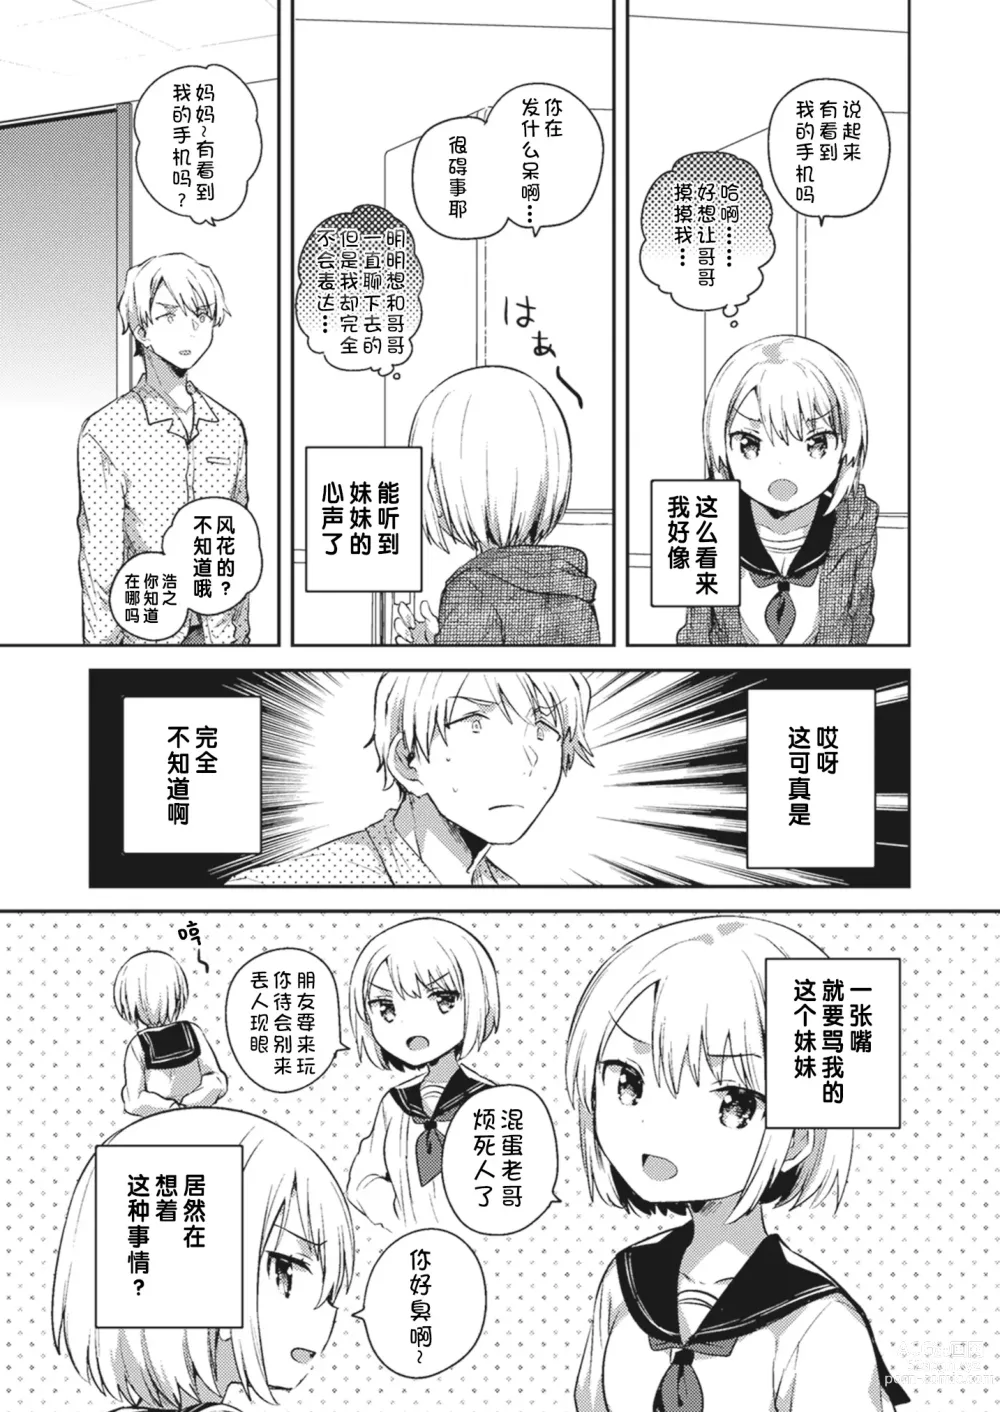 Page 2 of doujinshi 能听见妹妹的心声